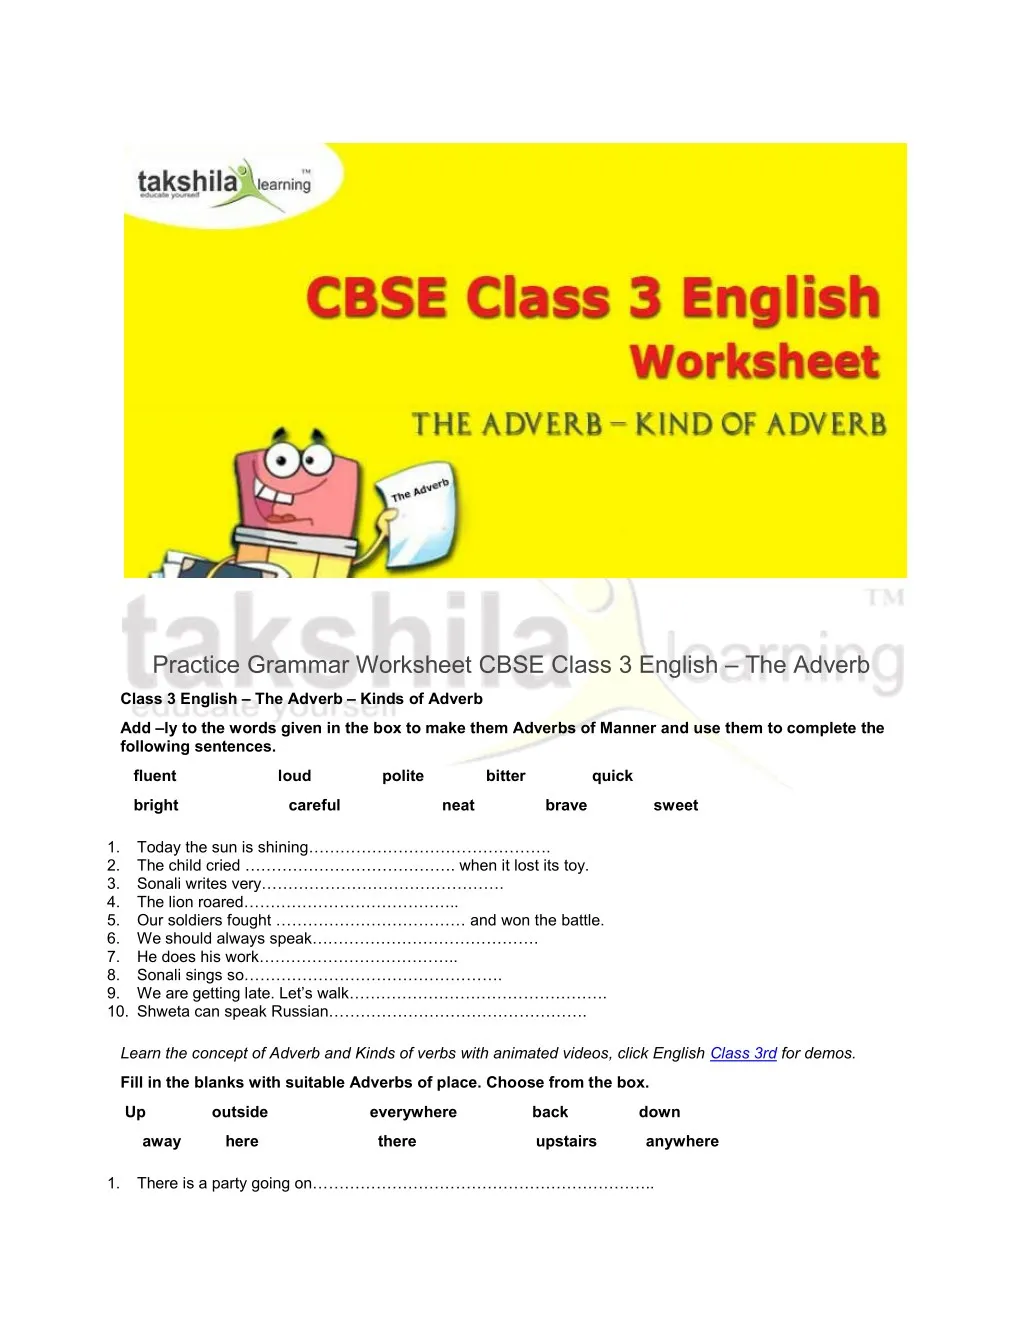 practice grammar worksheet cbse class 3 english